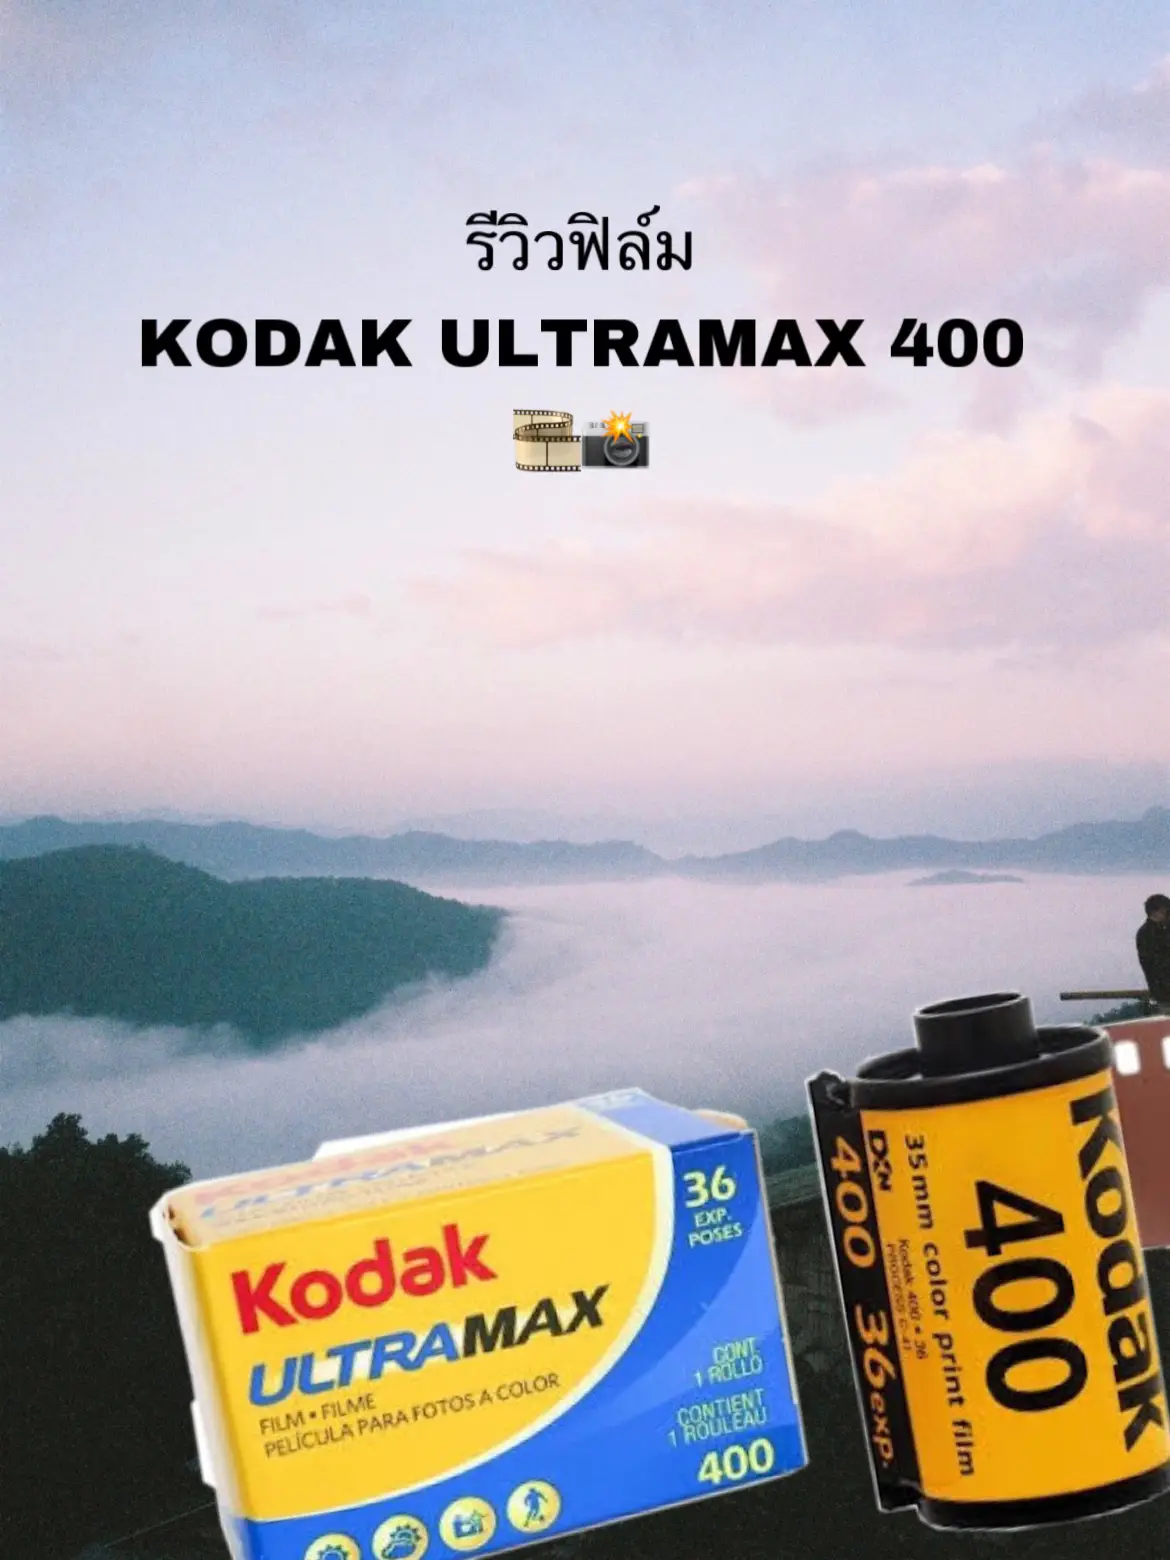 kodak ultramax 400 film review🎞📸, Gallery posted by notyourjean